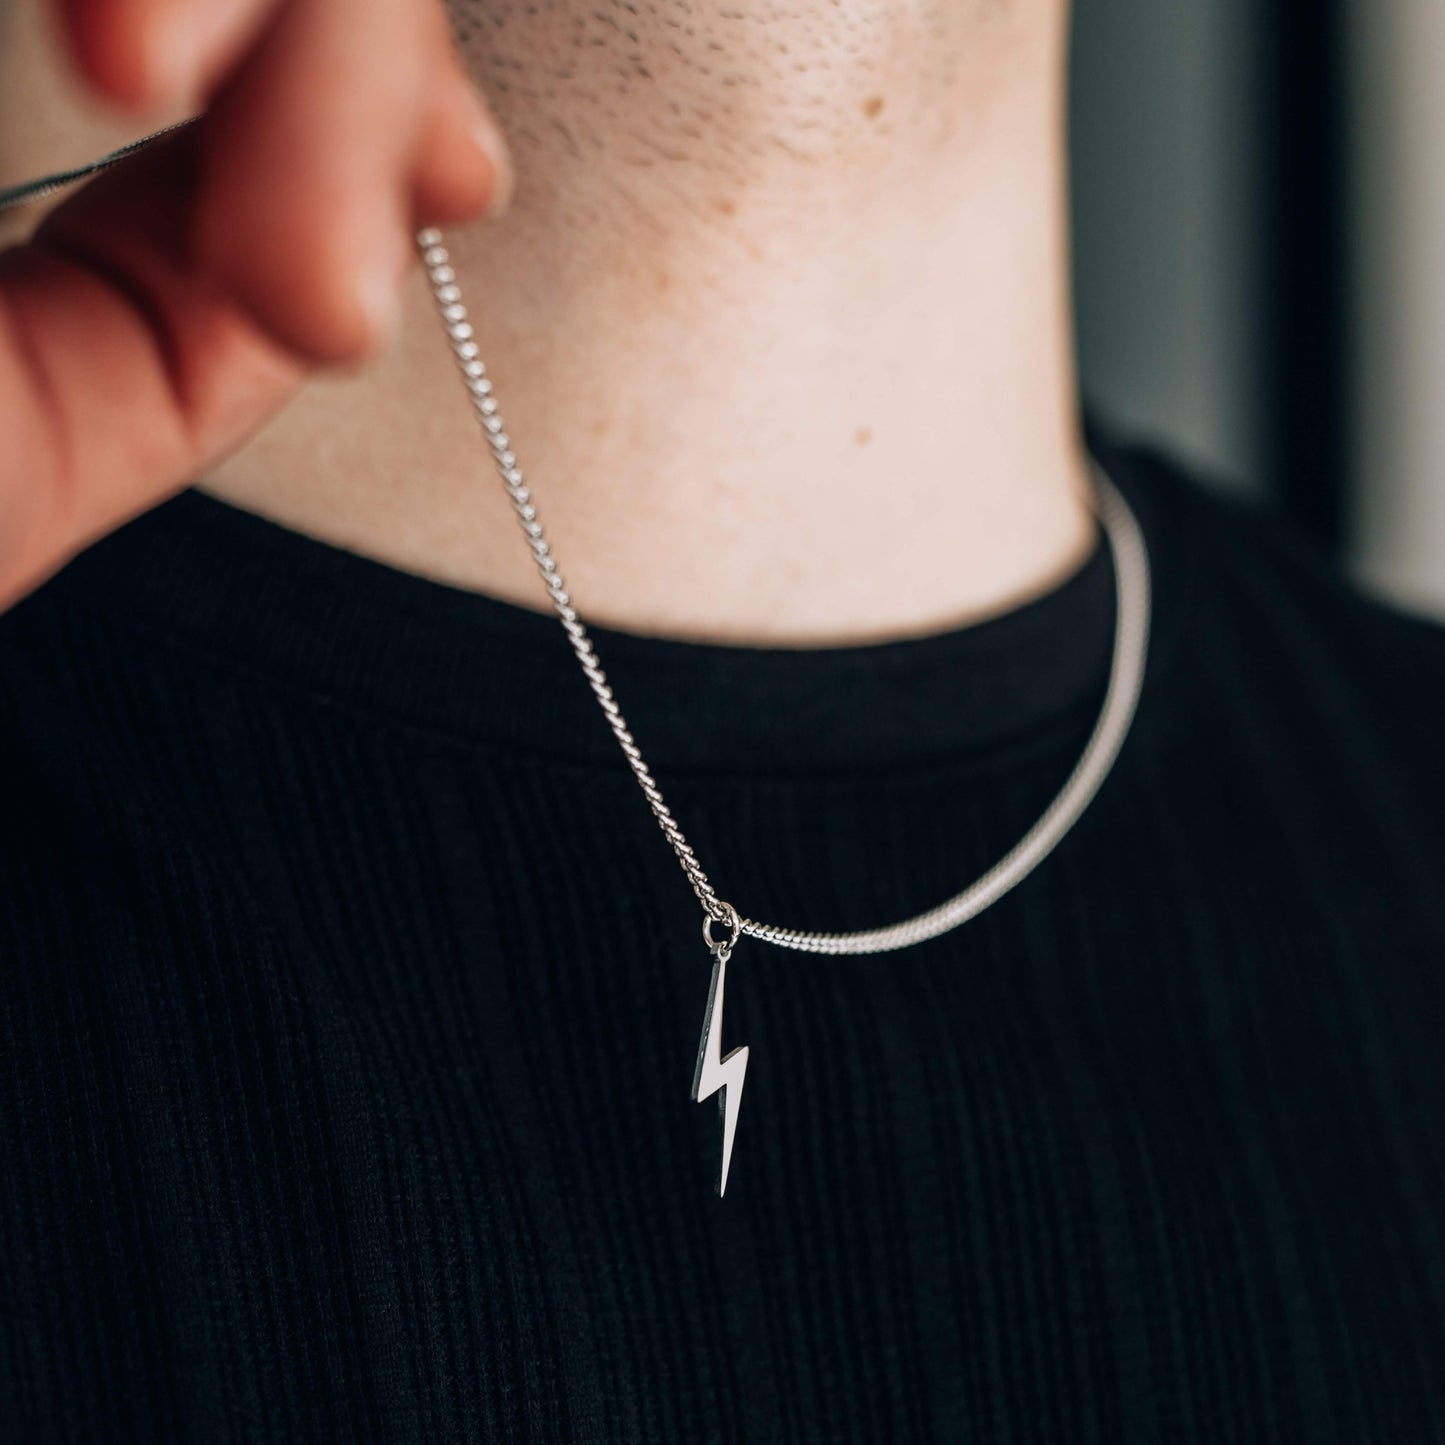 Silver Lightning Bolt Pendant Necklace For Men or Women - Necklace - Boutique Wear RENN